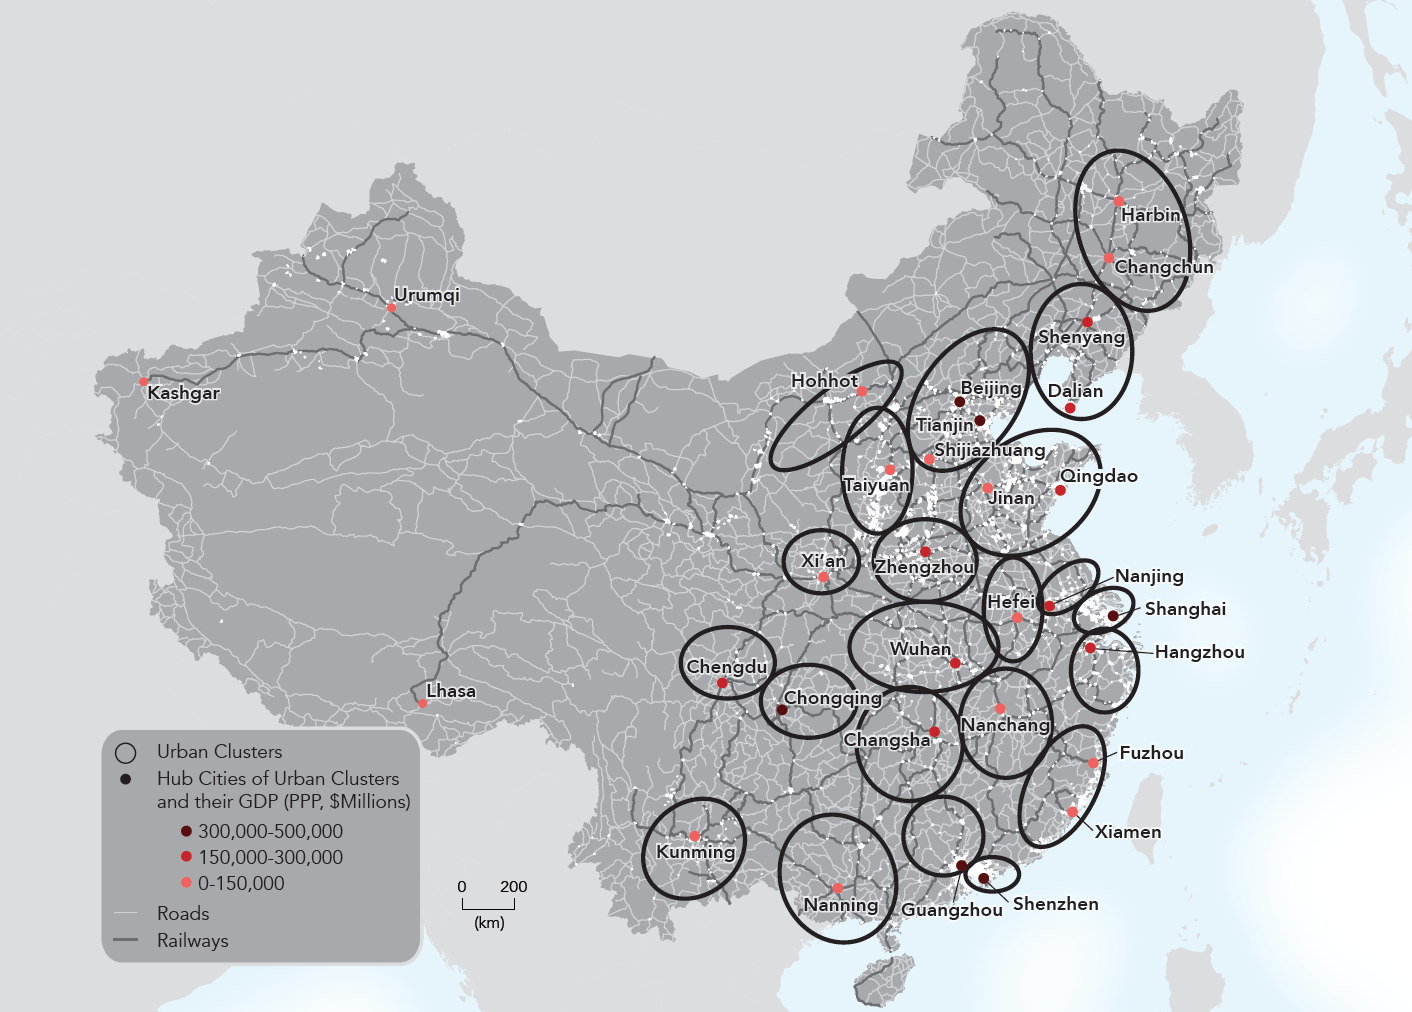 China: Empire of Mega-Cities